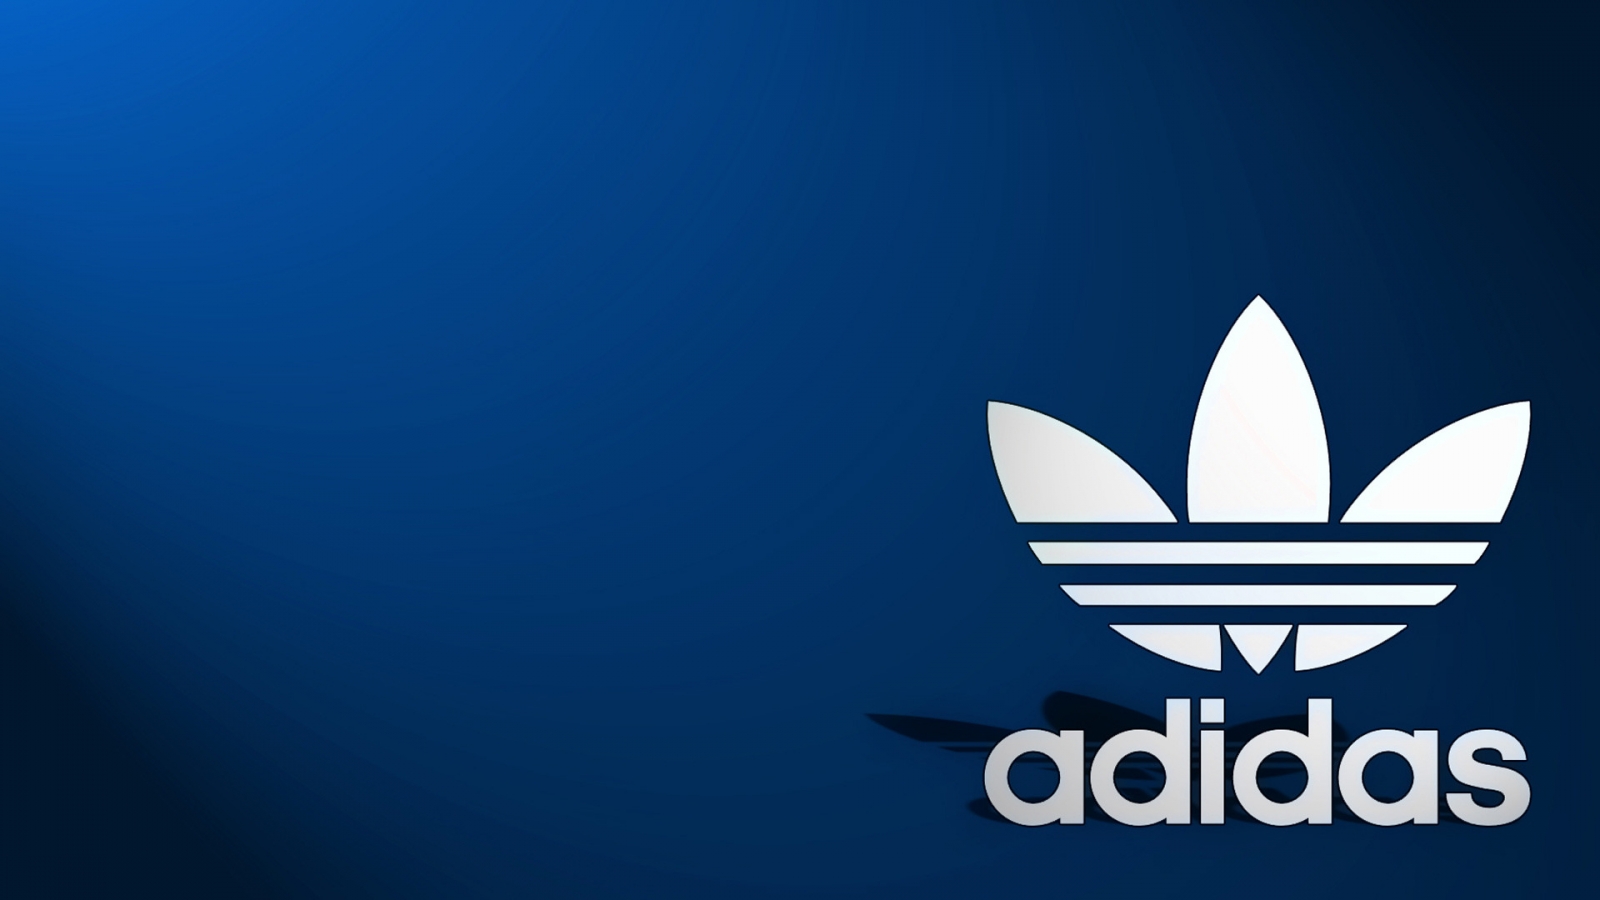 Adidas Logo Blue Background for 1600 x 900 HDTV resolution